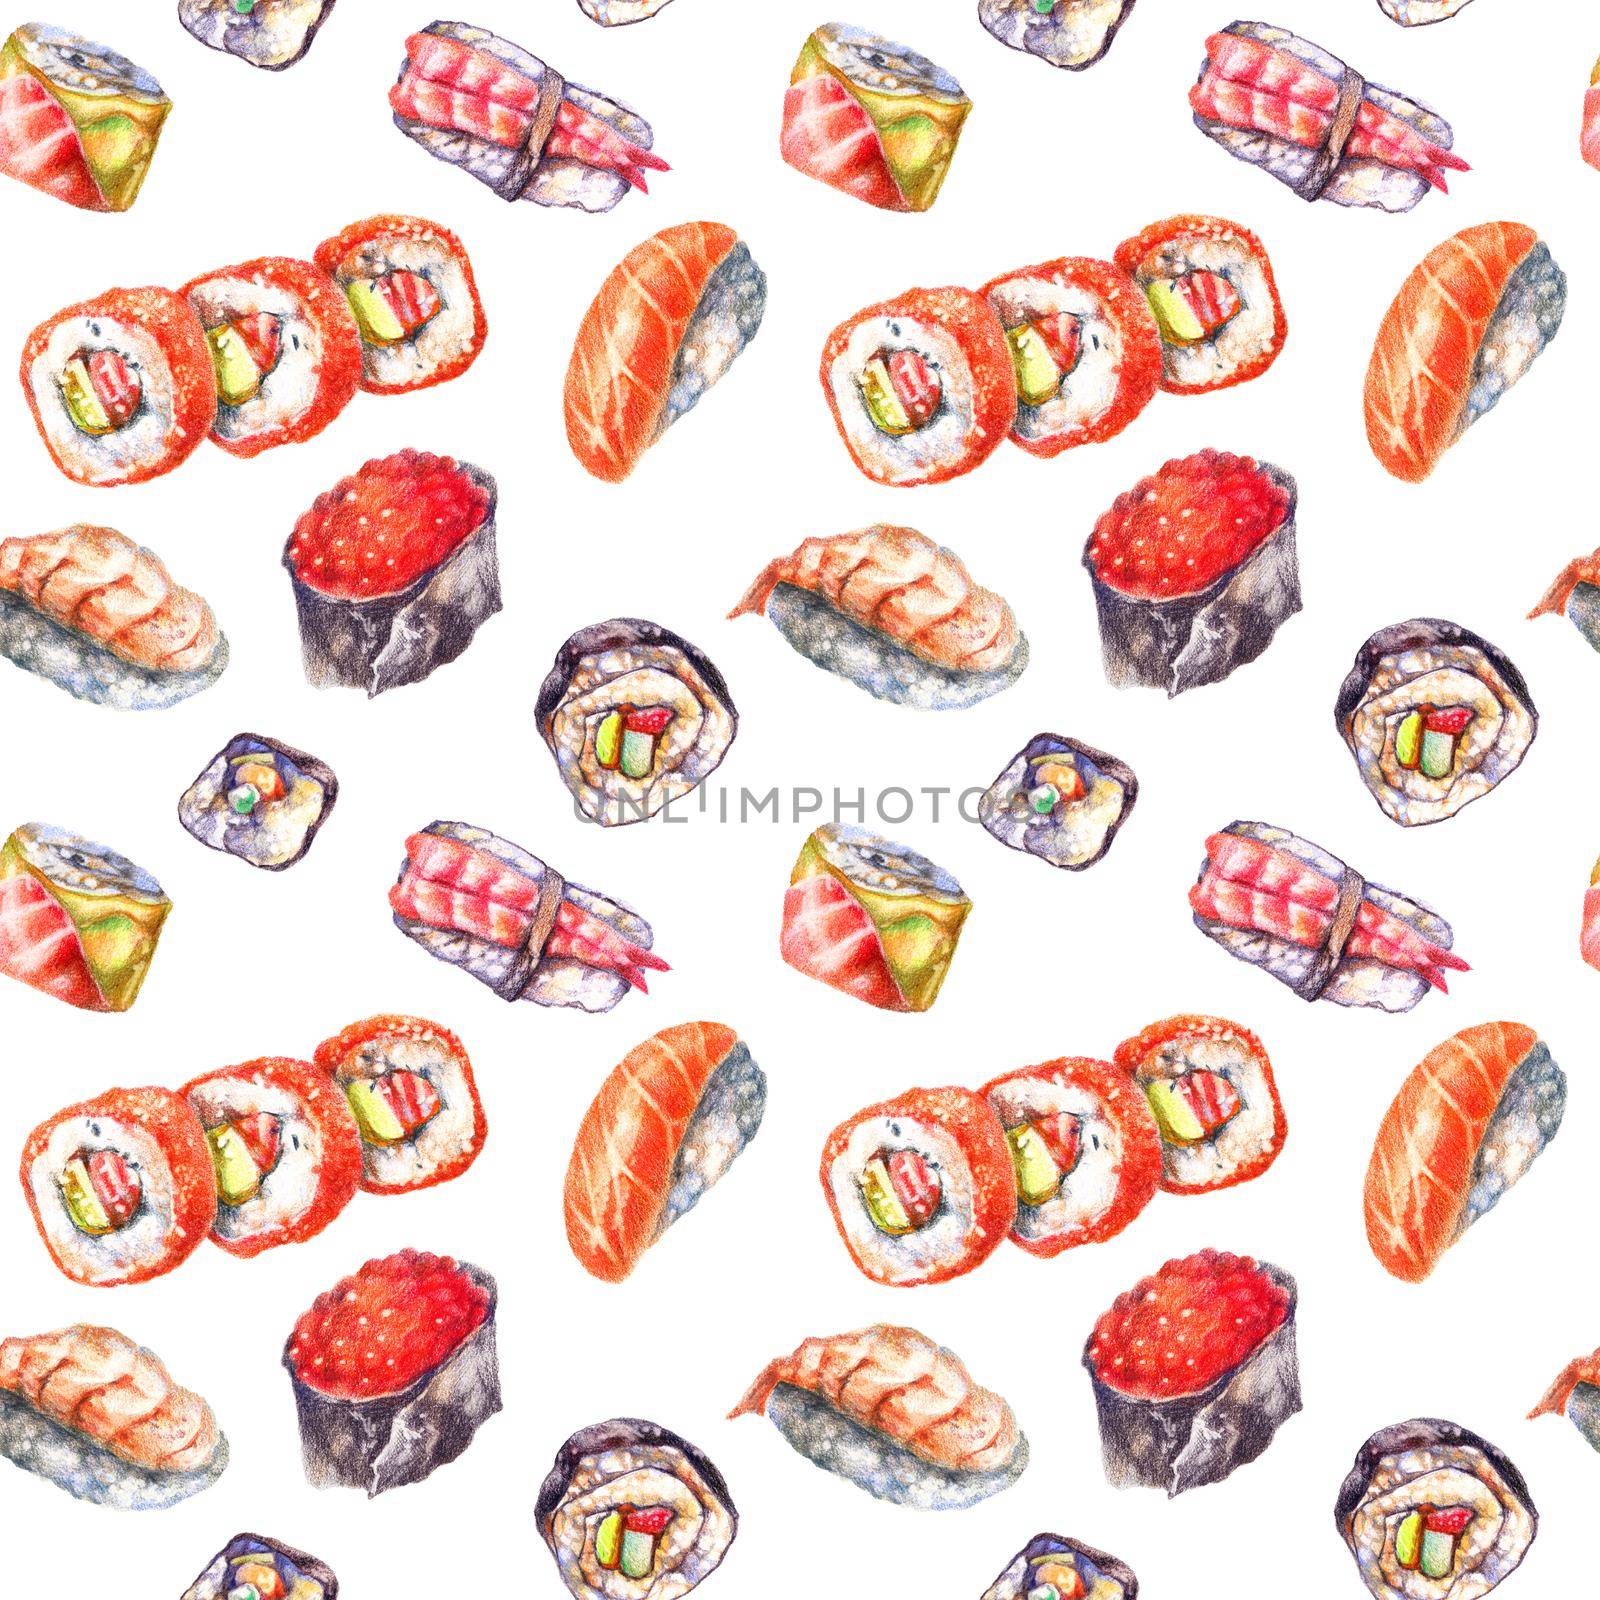 Color pencils illustration of sushi and rolls by Olatarakanova